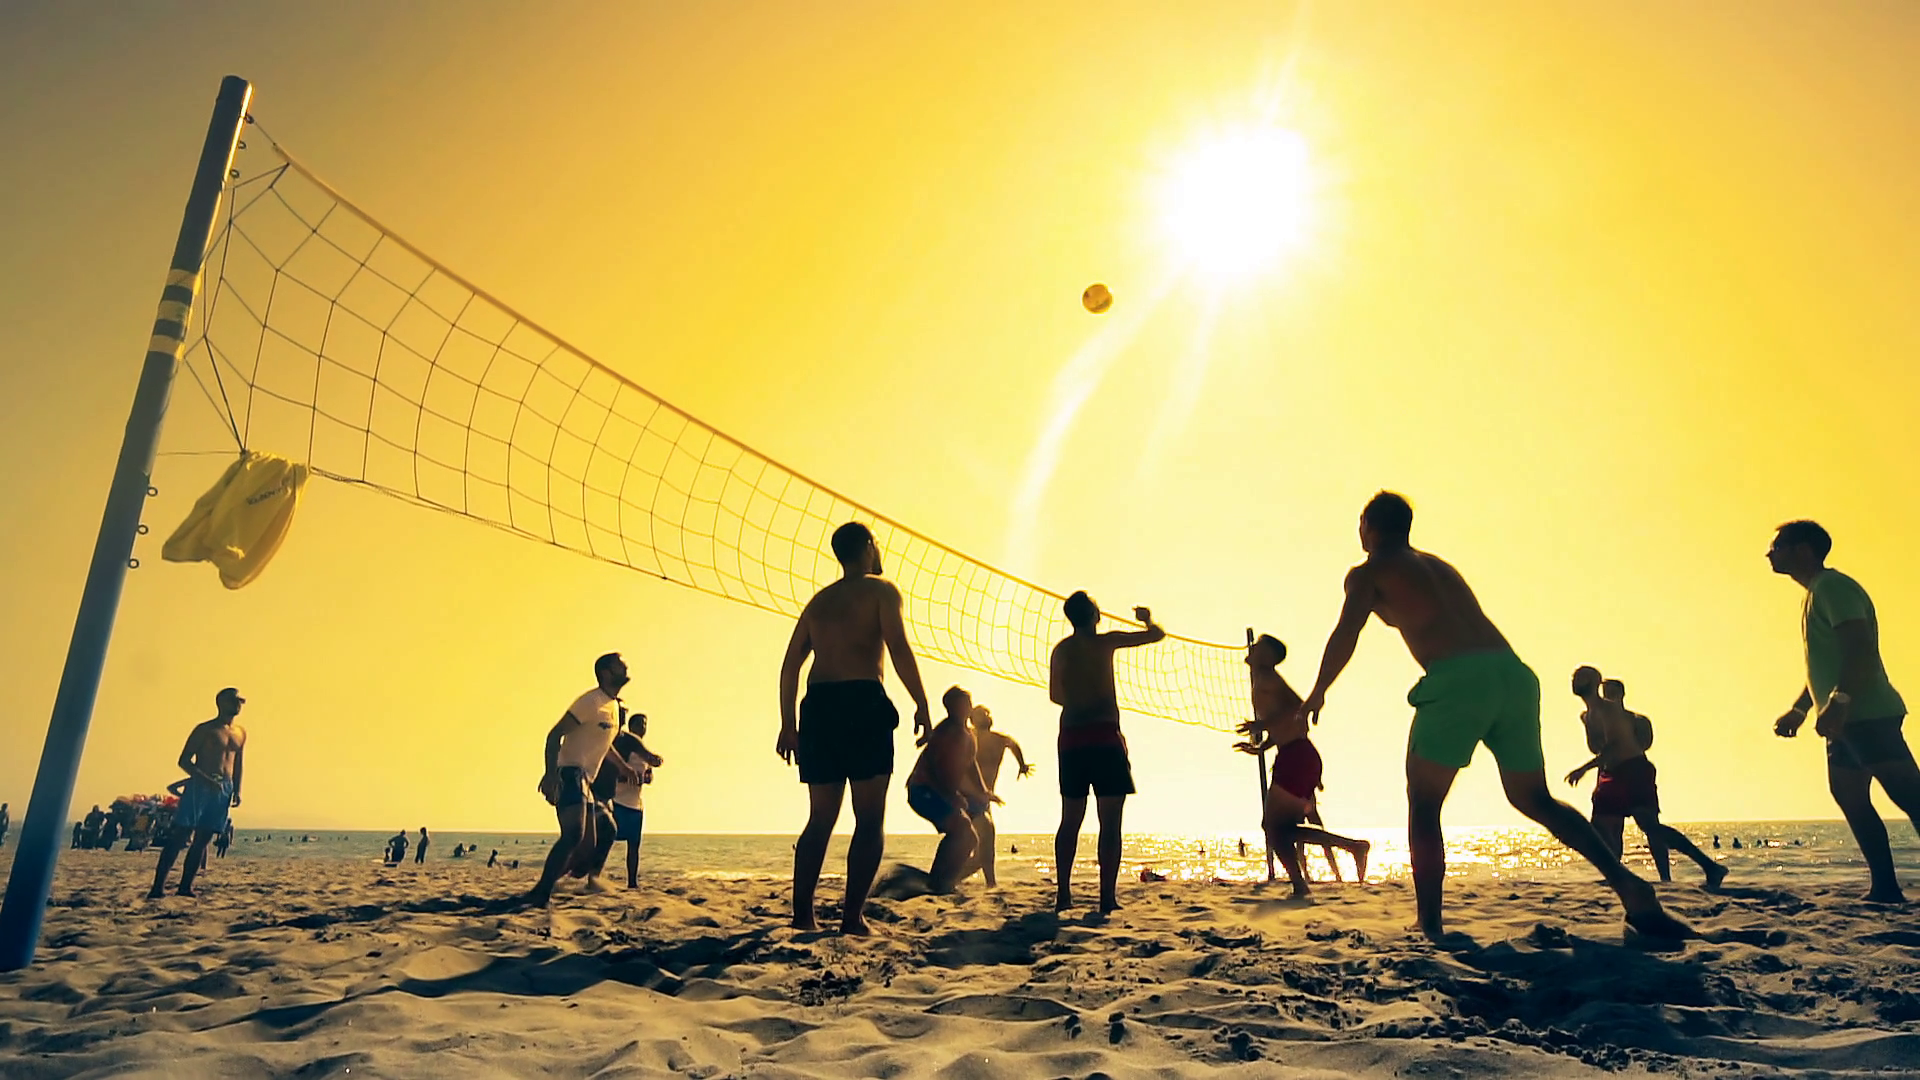 What sports do you enjoy. Волейбол на пляже. Пляжный волейбол. Волейбол семья. Пляж волейбол фон.